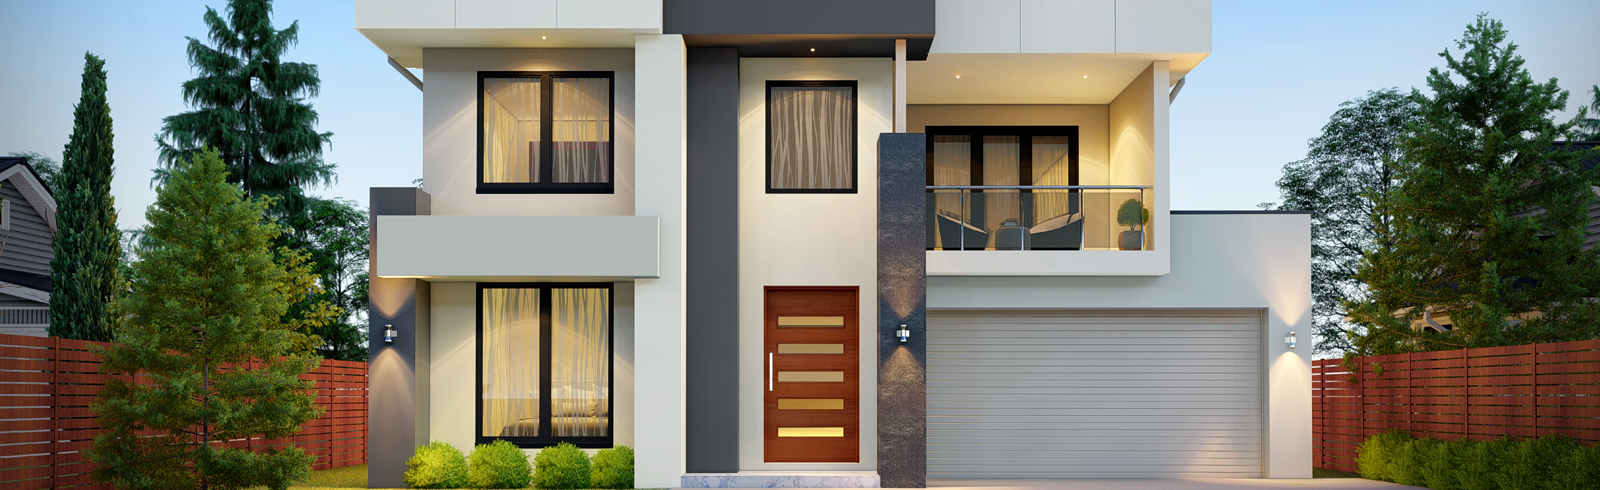 Home Decor, Window, Housing